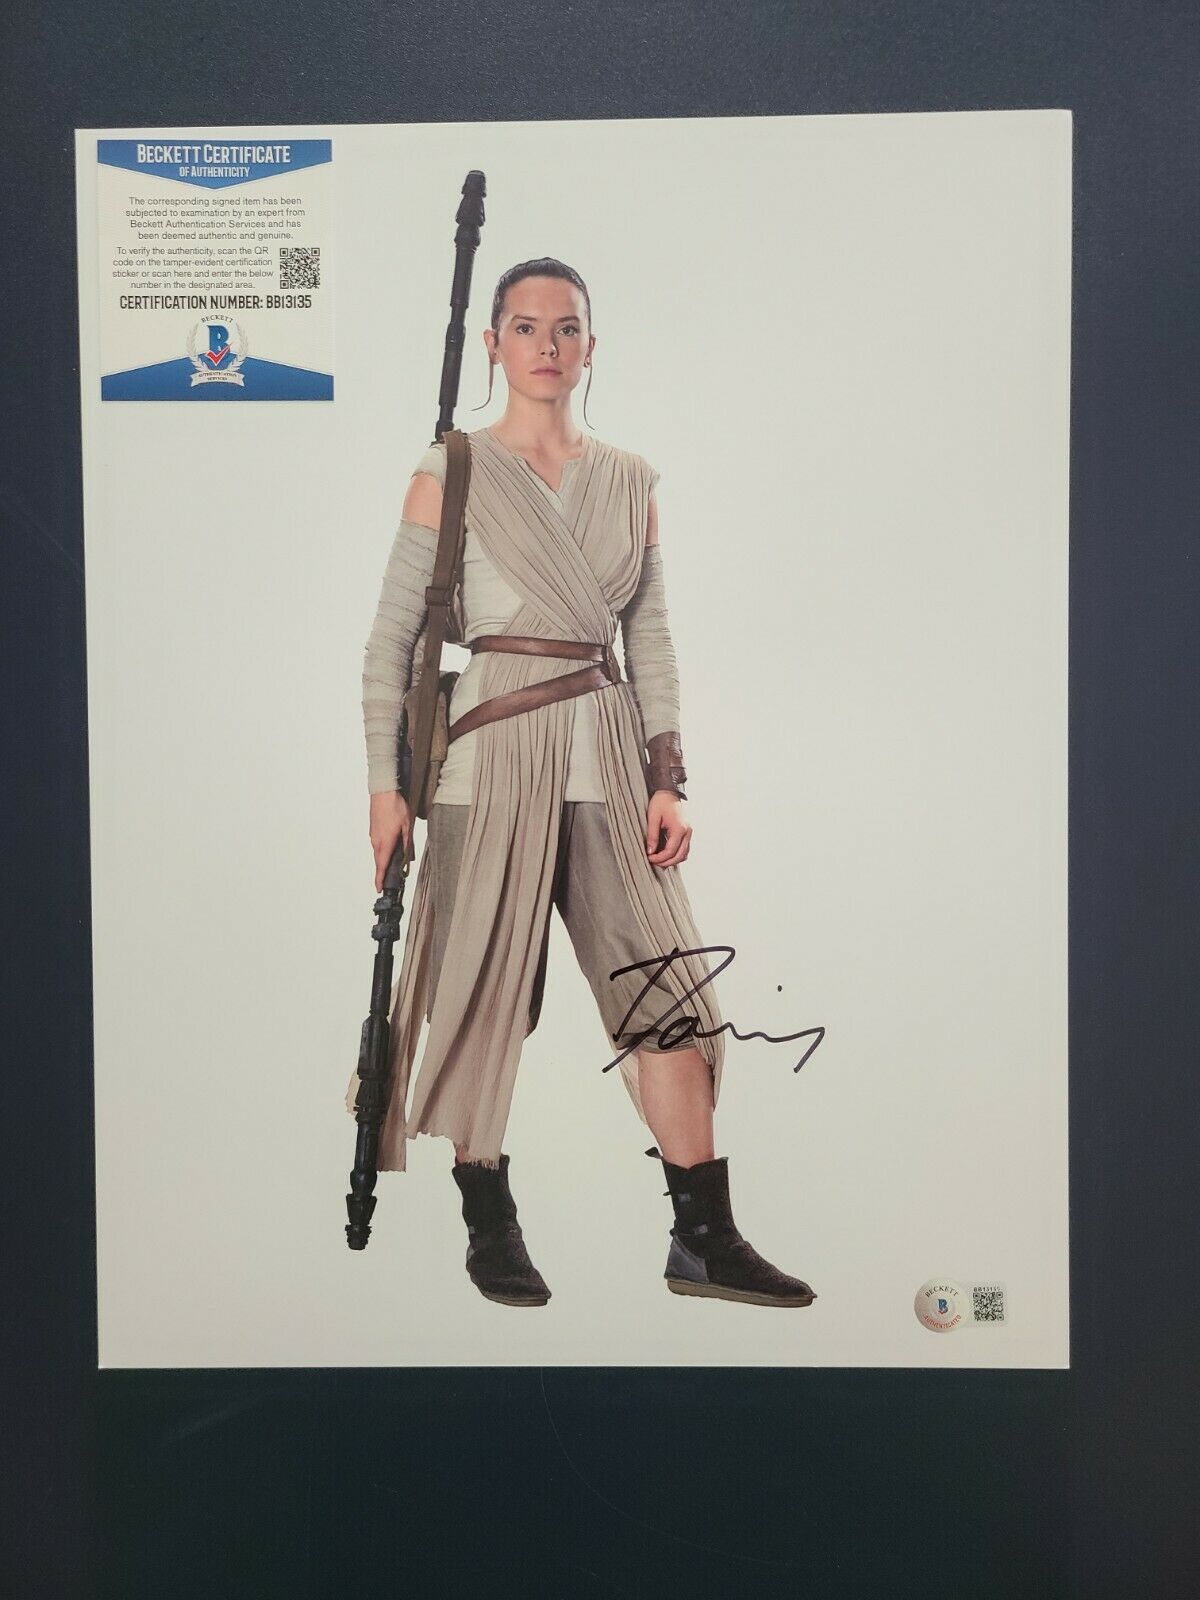 Daisy Ridley Signed Star Wars The Force Awakens 8x10 Photo 4 Rey Beckett BAS 